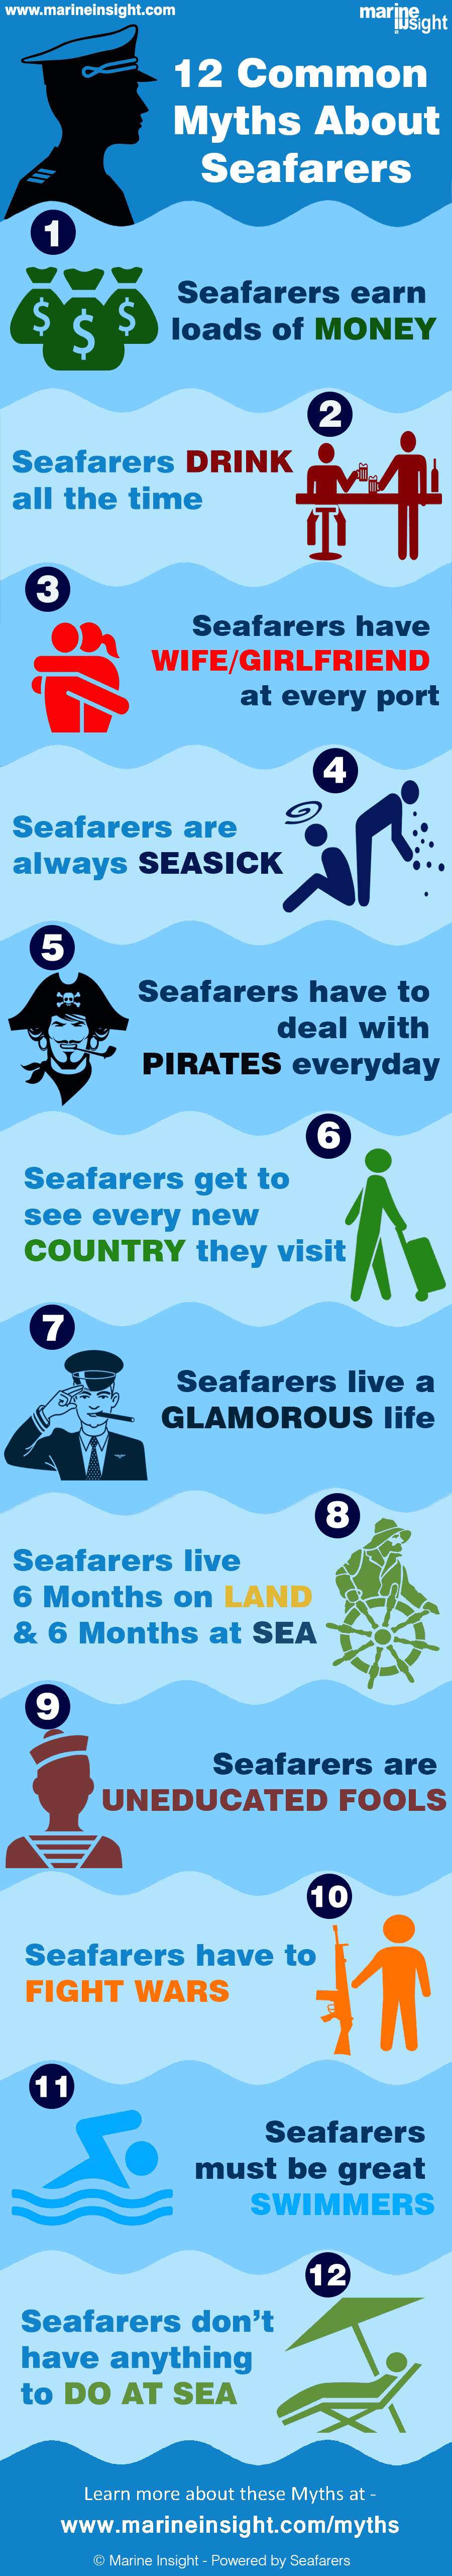 seafarers myth